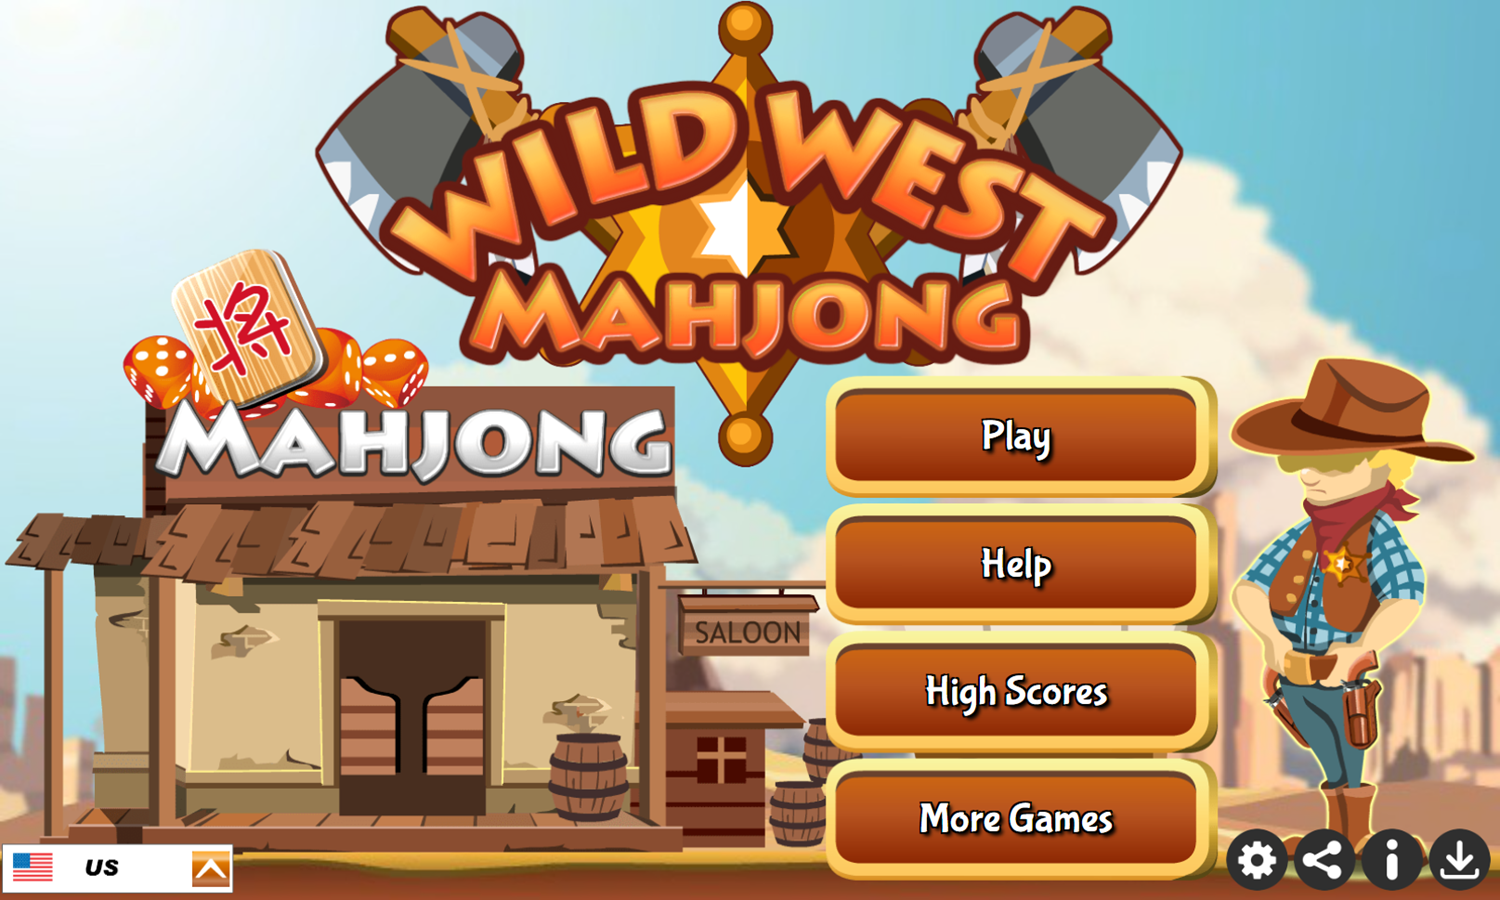 Wild West Mahjong Game Welcome Screen Screenshot.